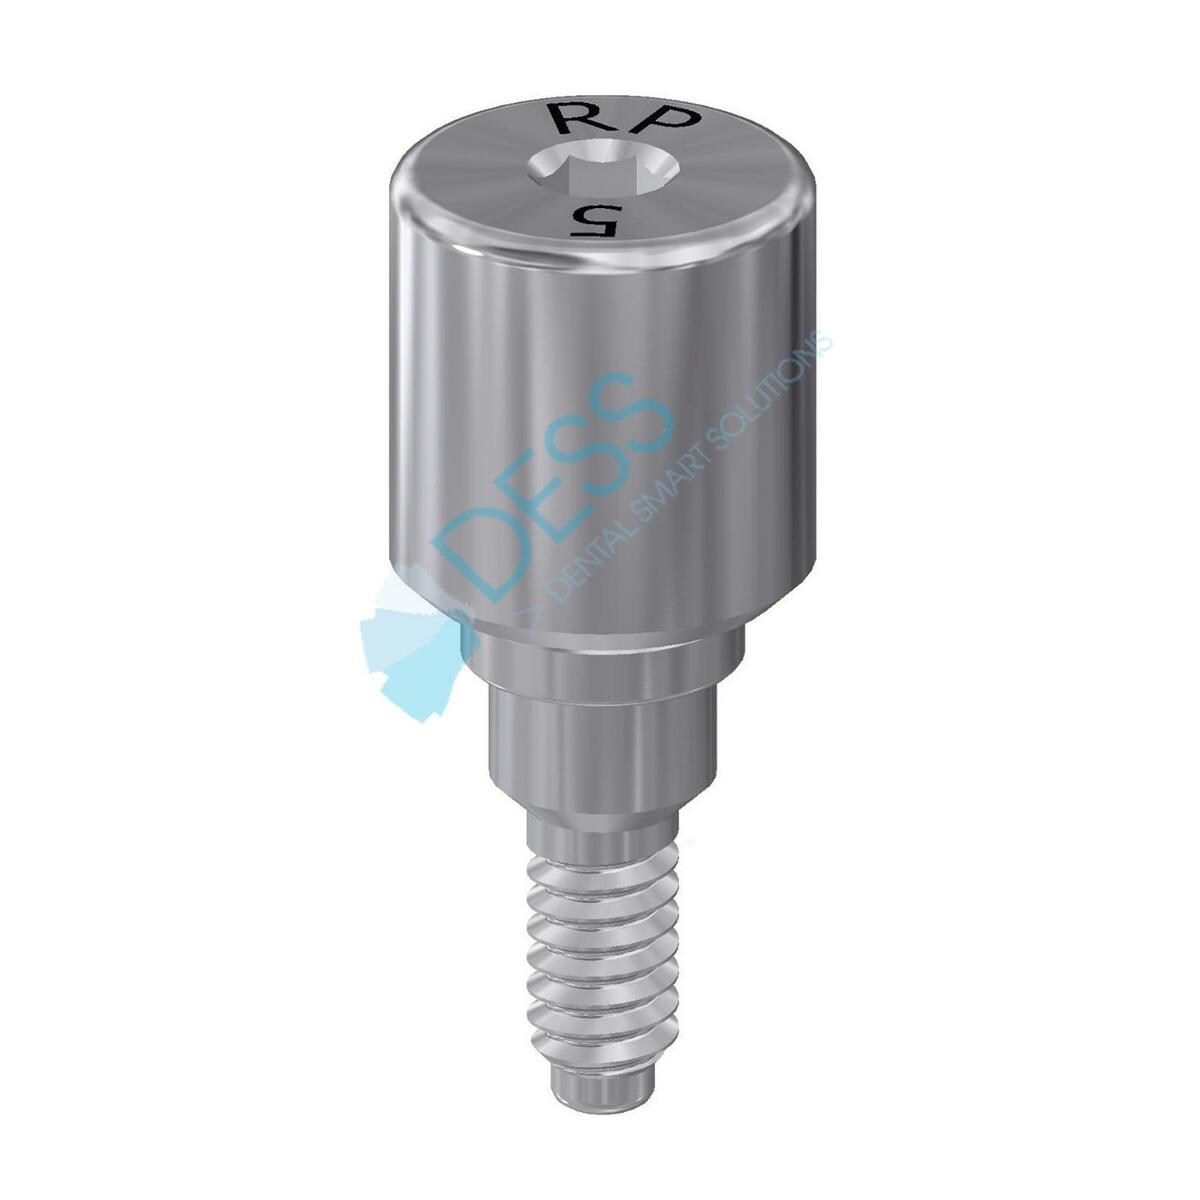 Gingivaformer - kompatibel mit Dentsply Friadent® Xive® - RP Ø 3,8 mm, Höhe 5,0 mm